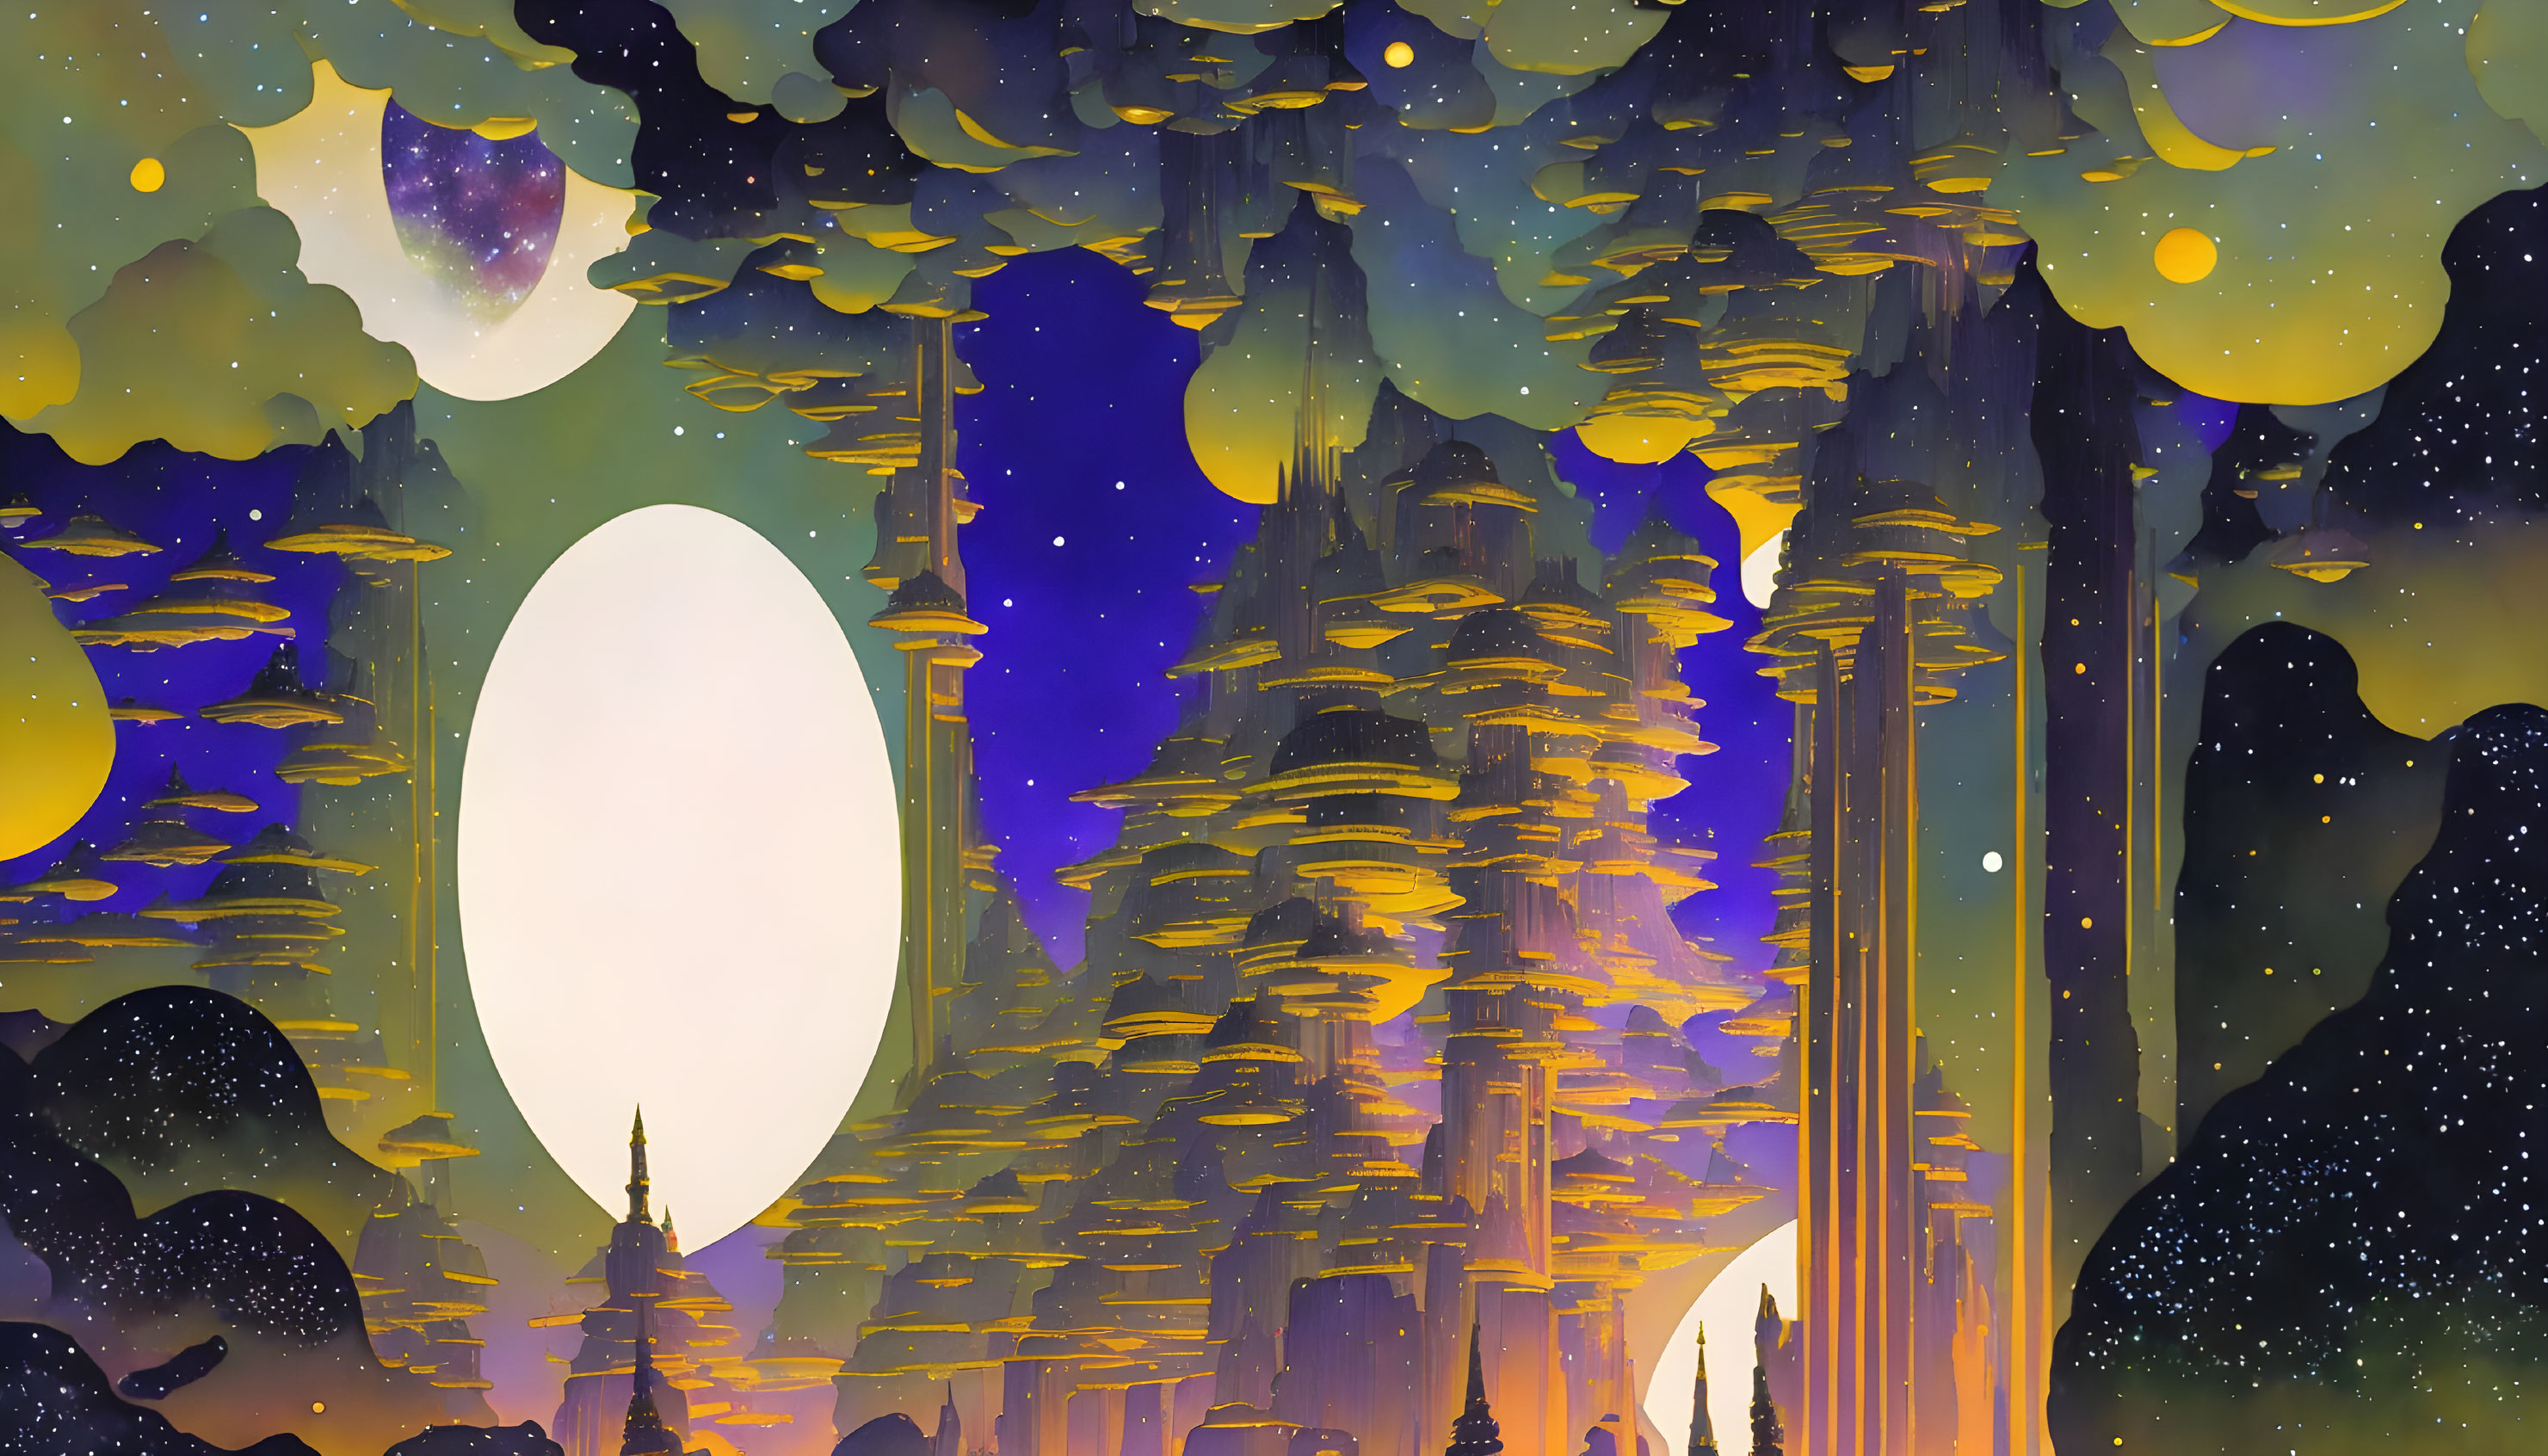 Celestial Towers: Moonlit Dreams